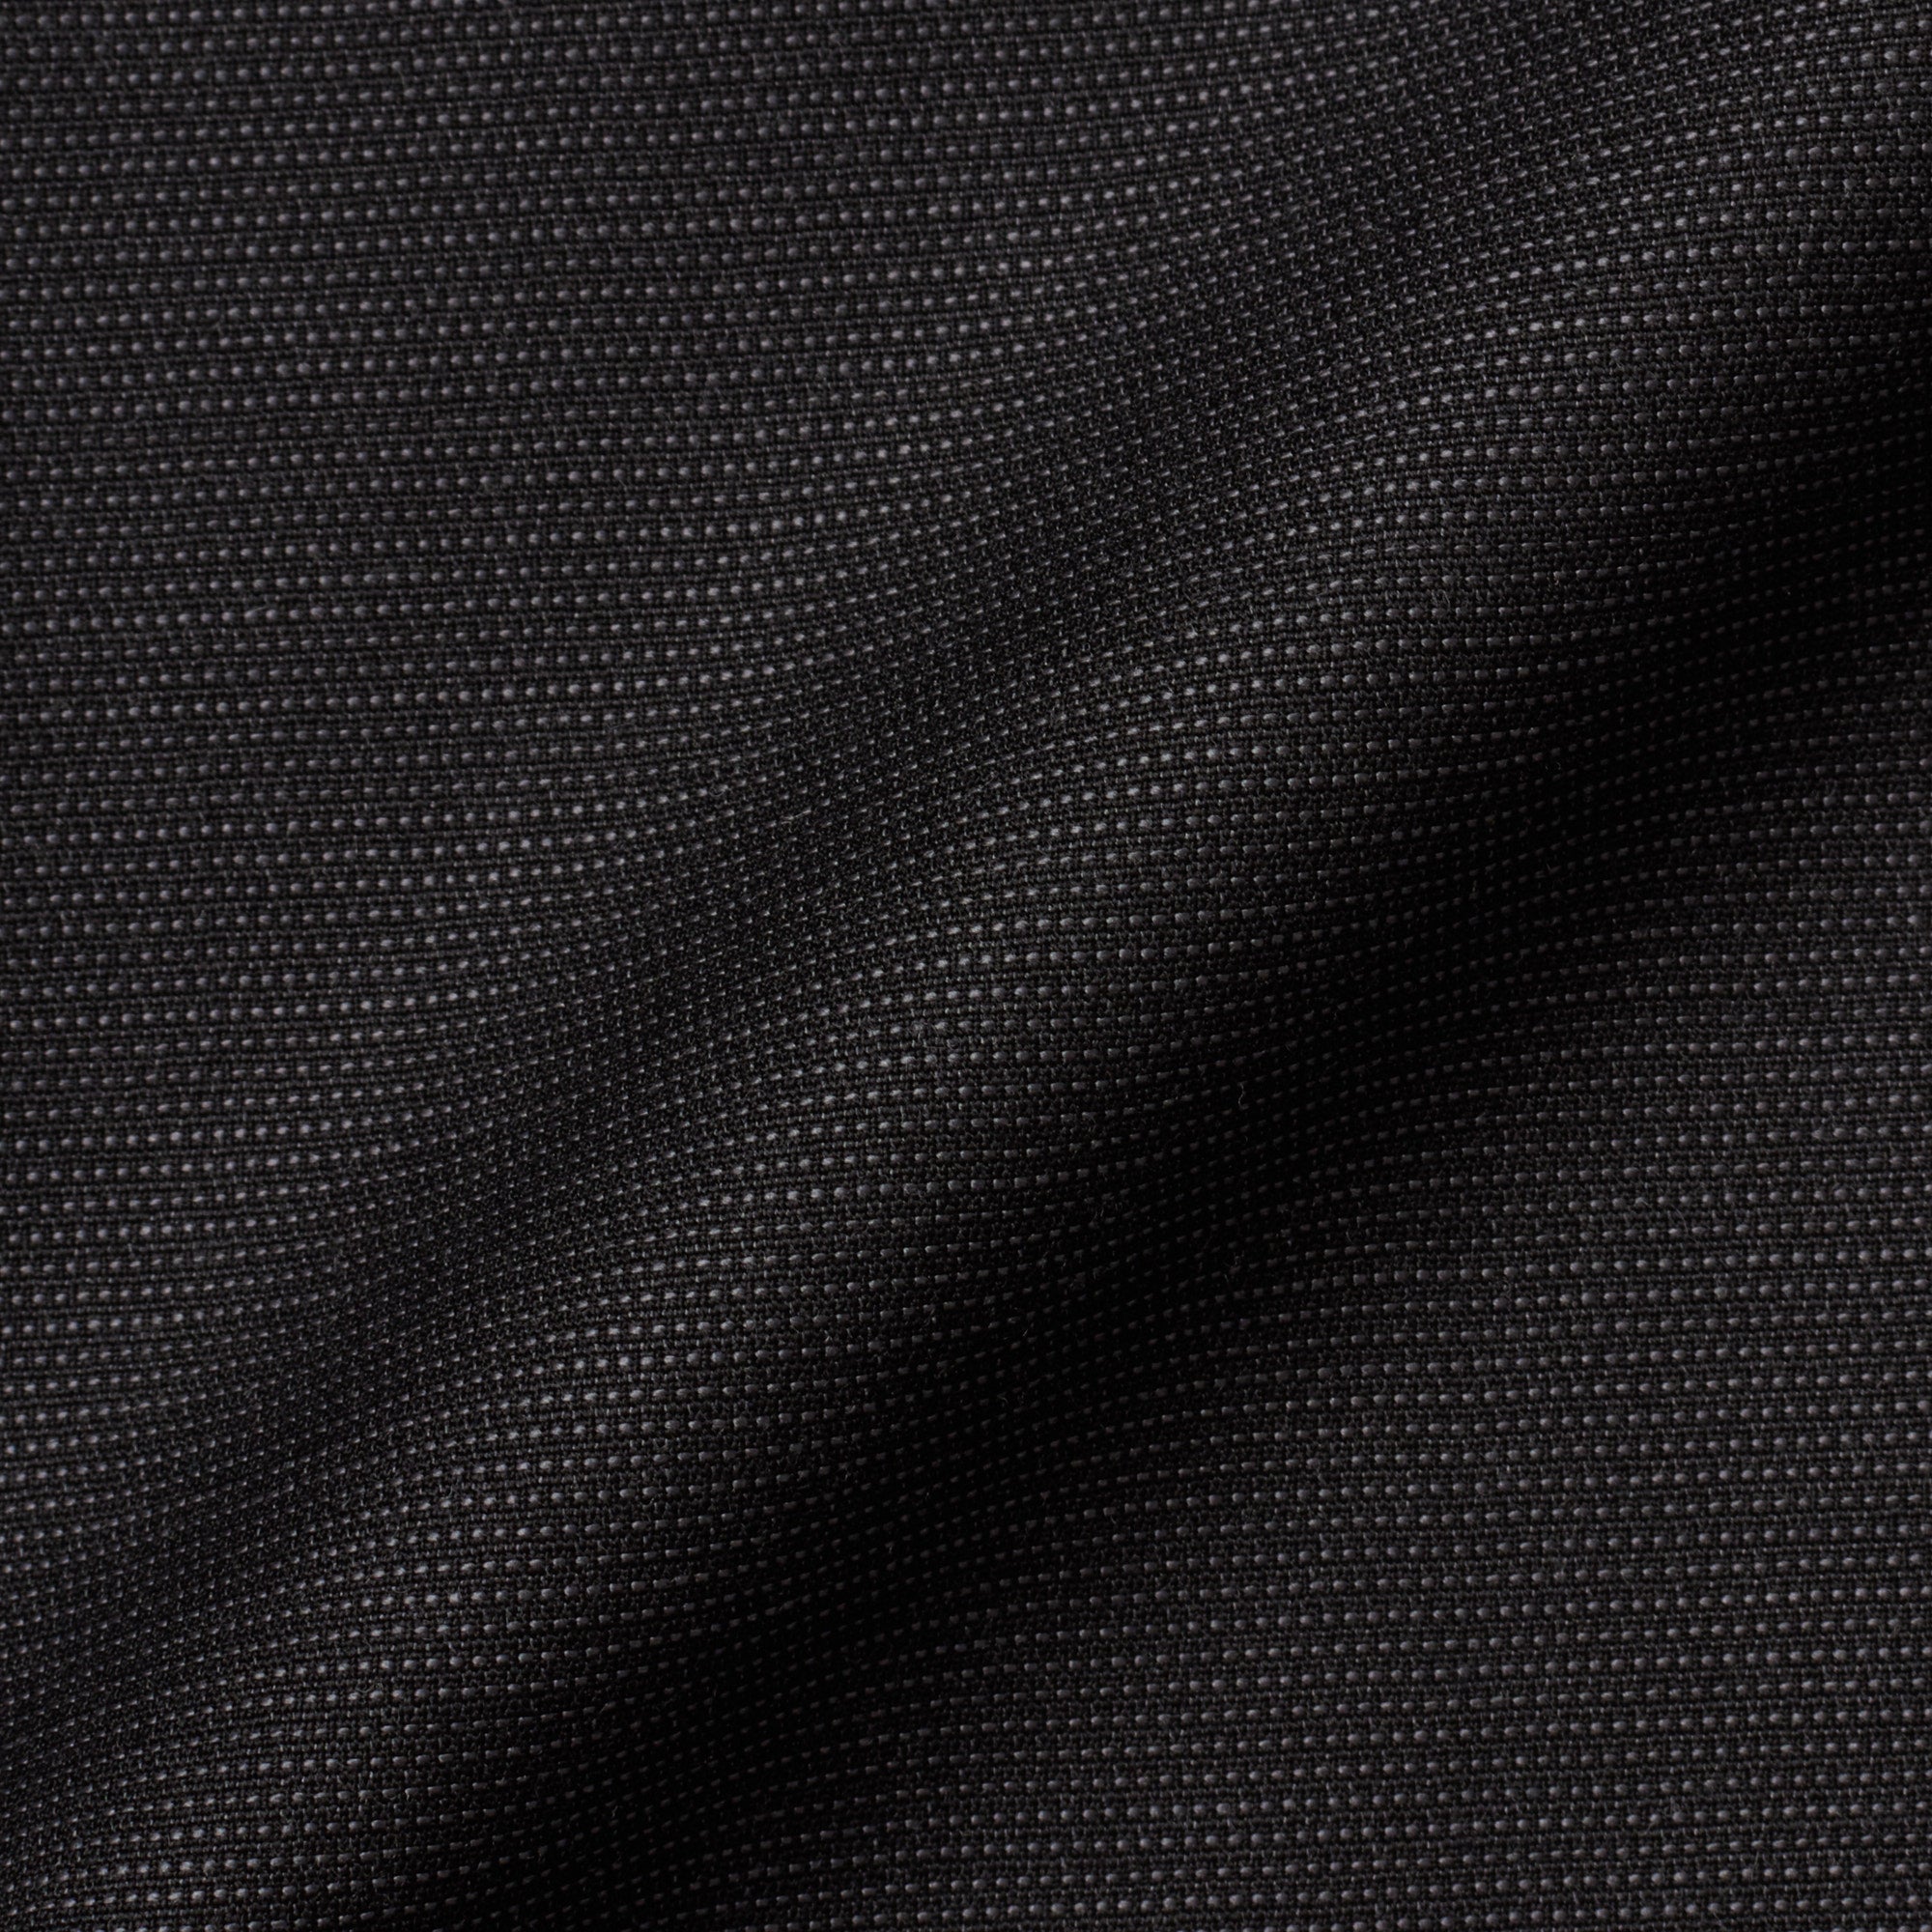 CANALI 1934 Dark Gray Water Resistant Wool 1 Button Peak Lapel Suit EU 50 US 40 Slim Fit CANALI